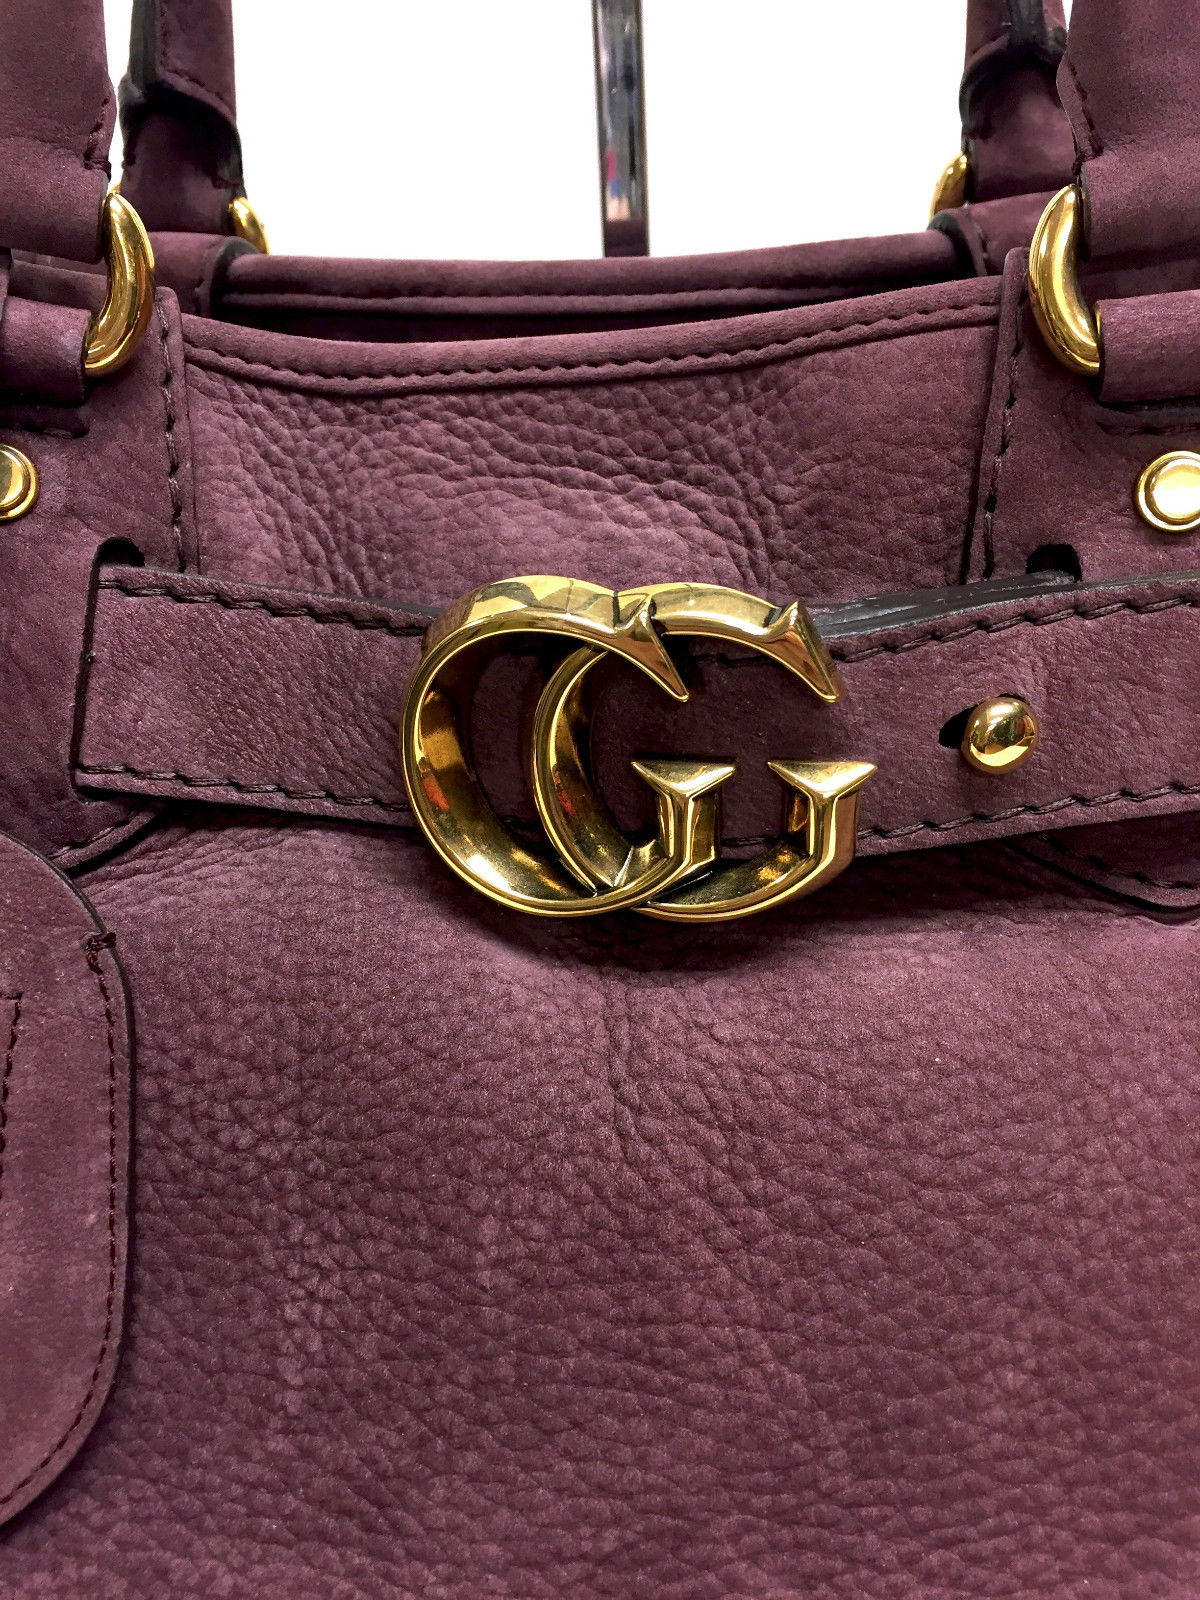 gucci burgundy purse